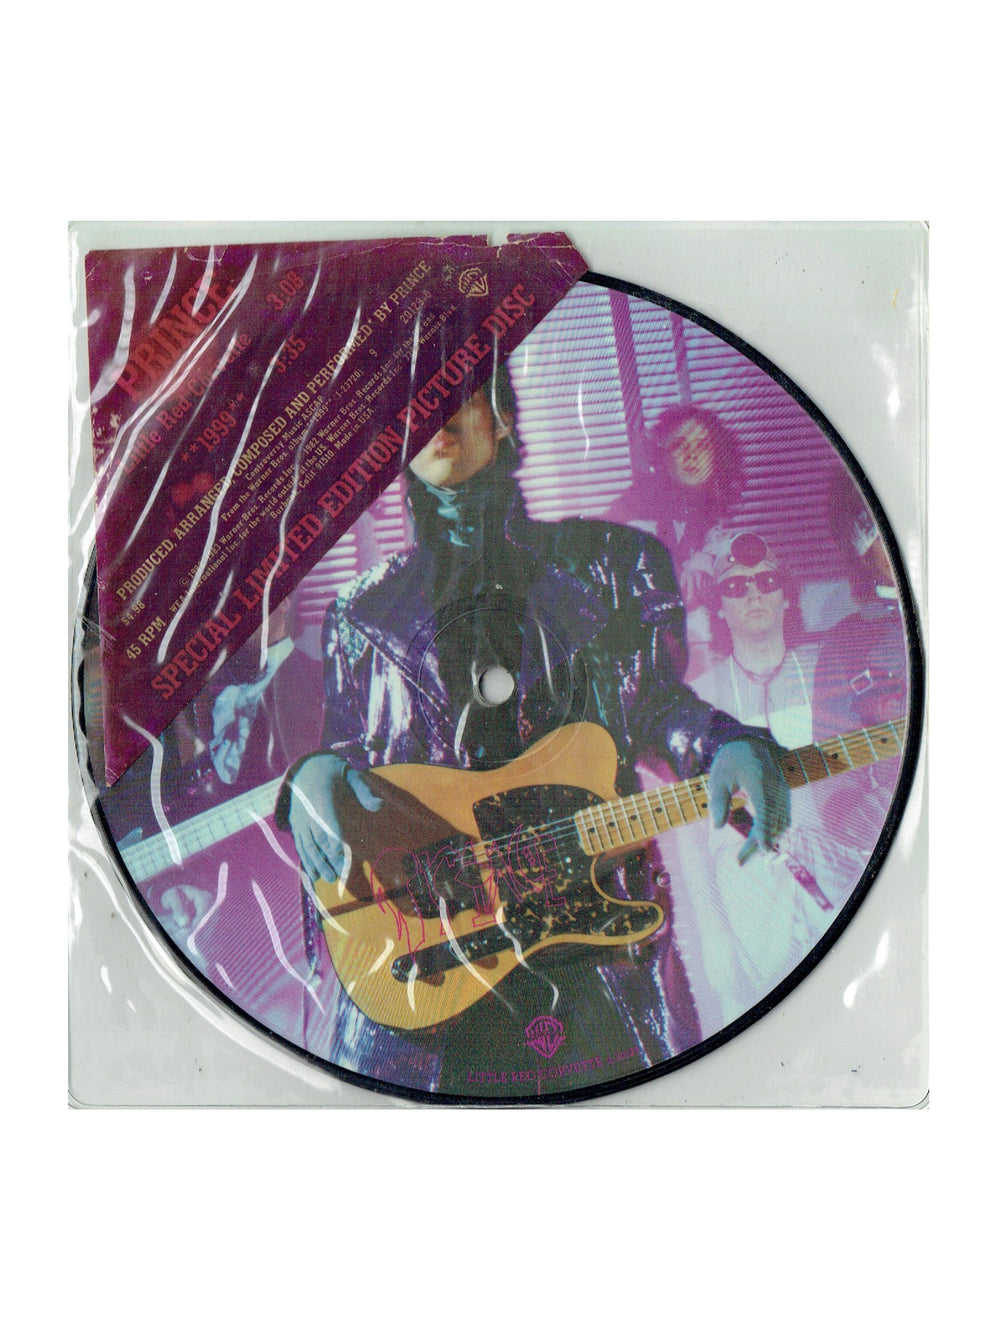 Prince 1999 Little Red Corvette 7 Inch Picture Disc Single Vinyl Original 1982 Release